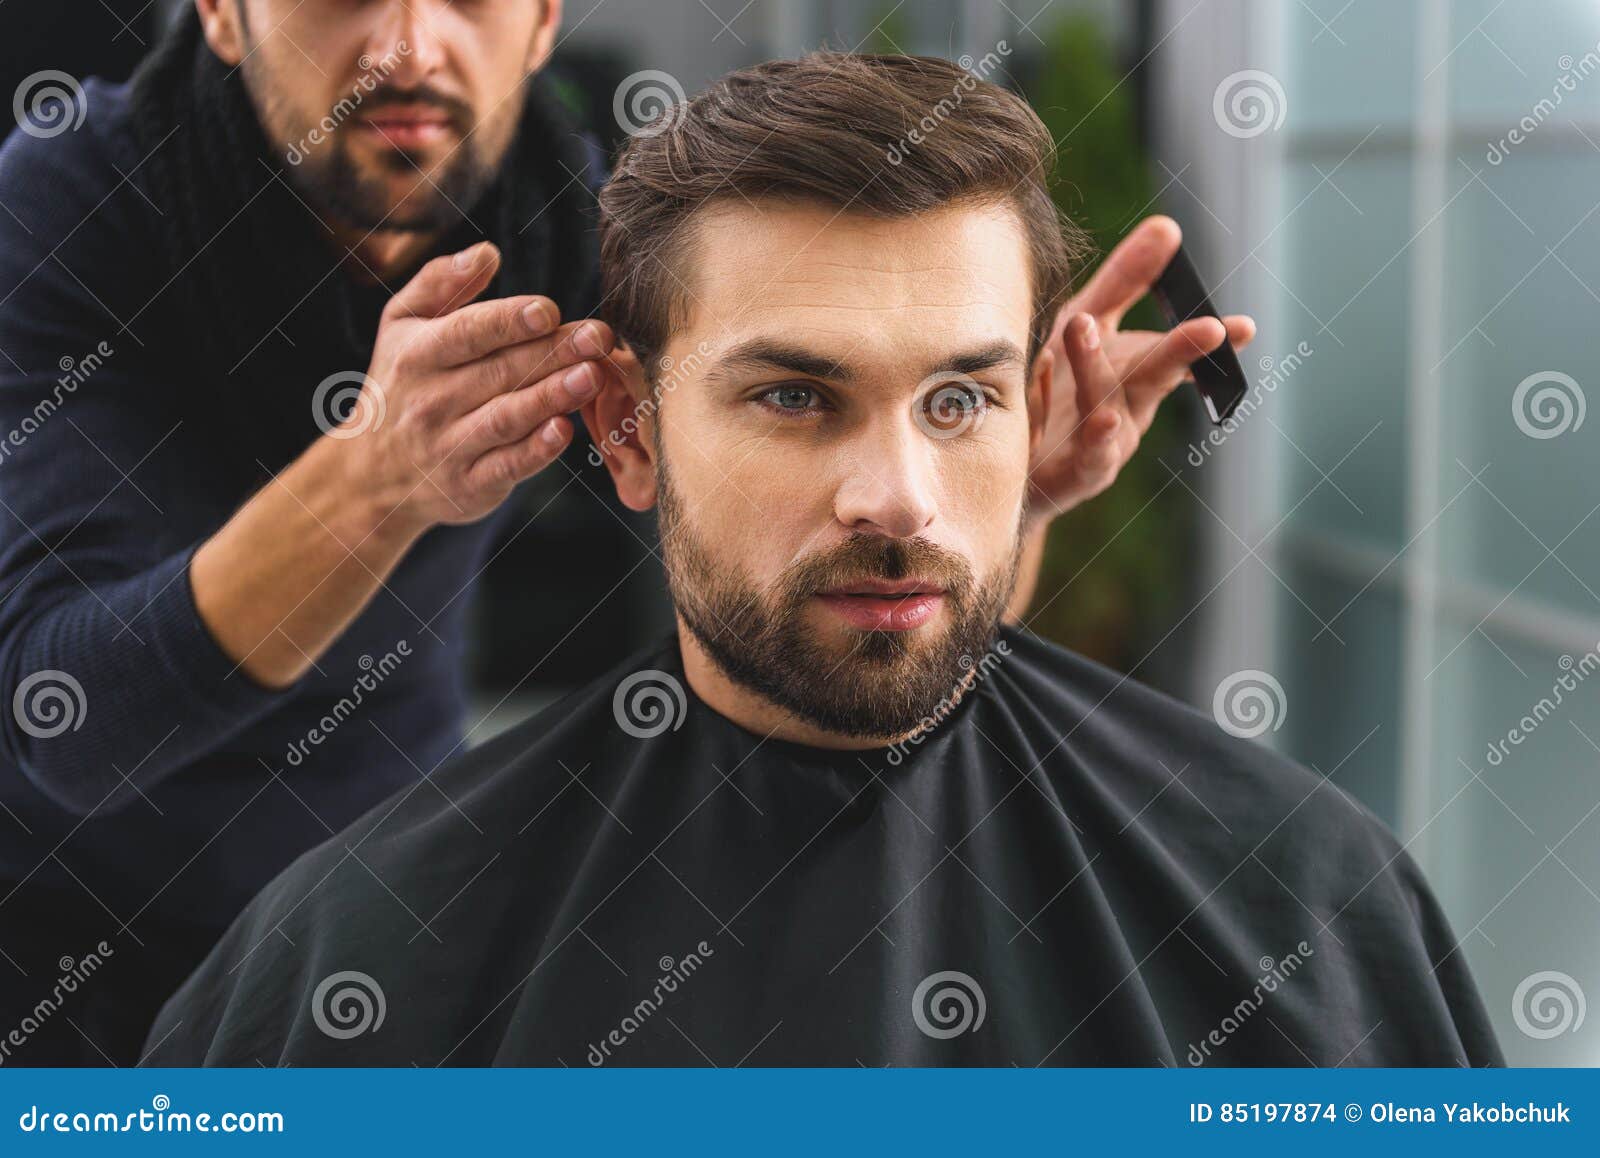 Male Haircut Image - wide 3